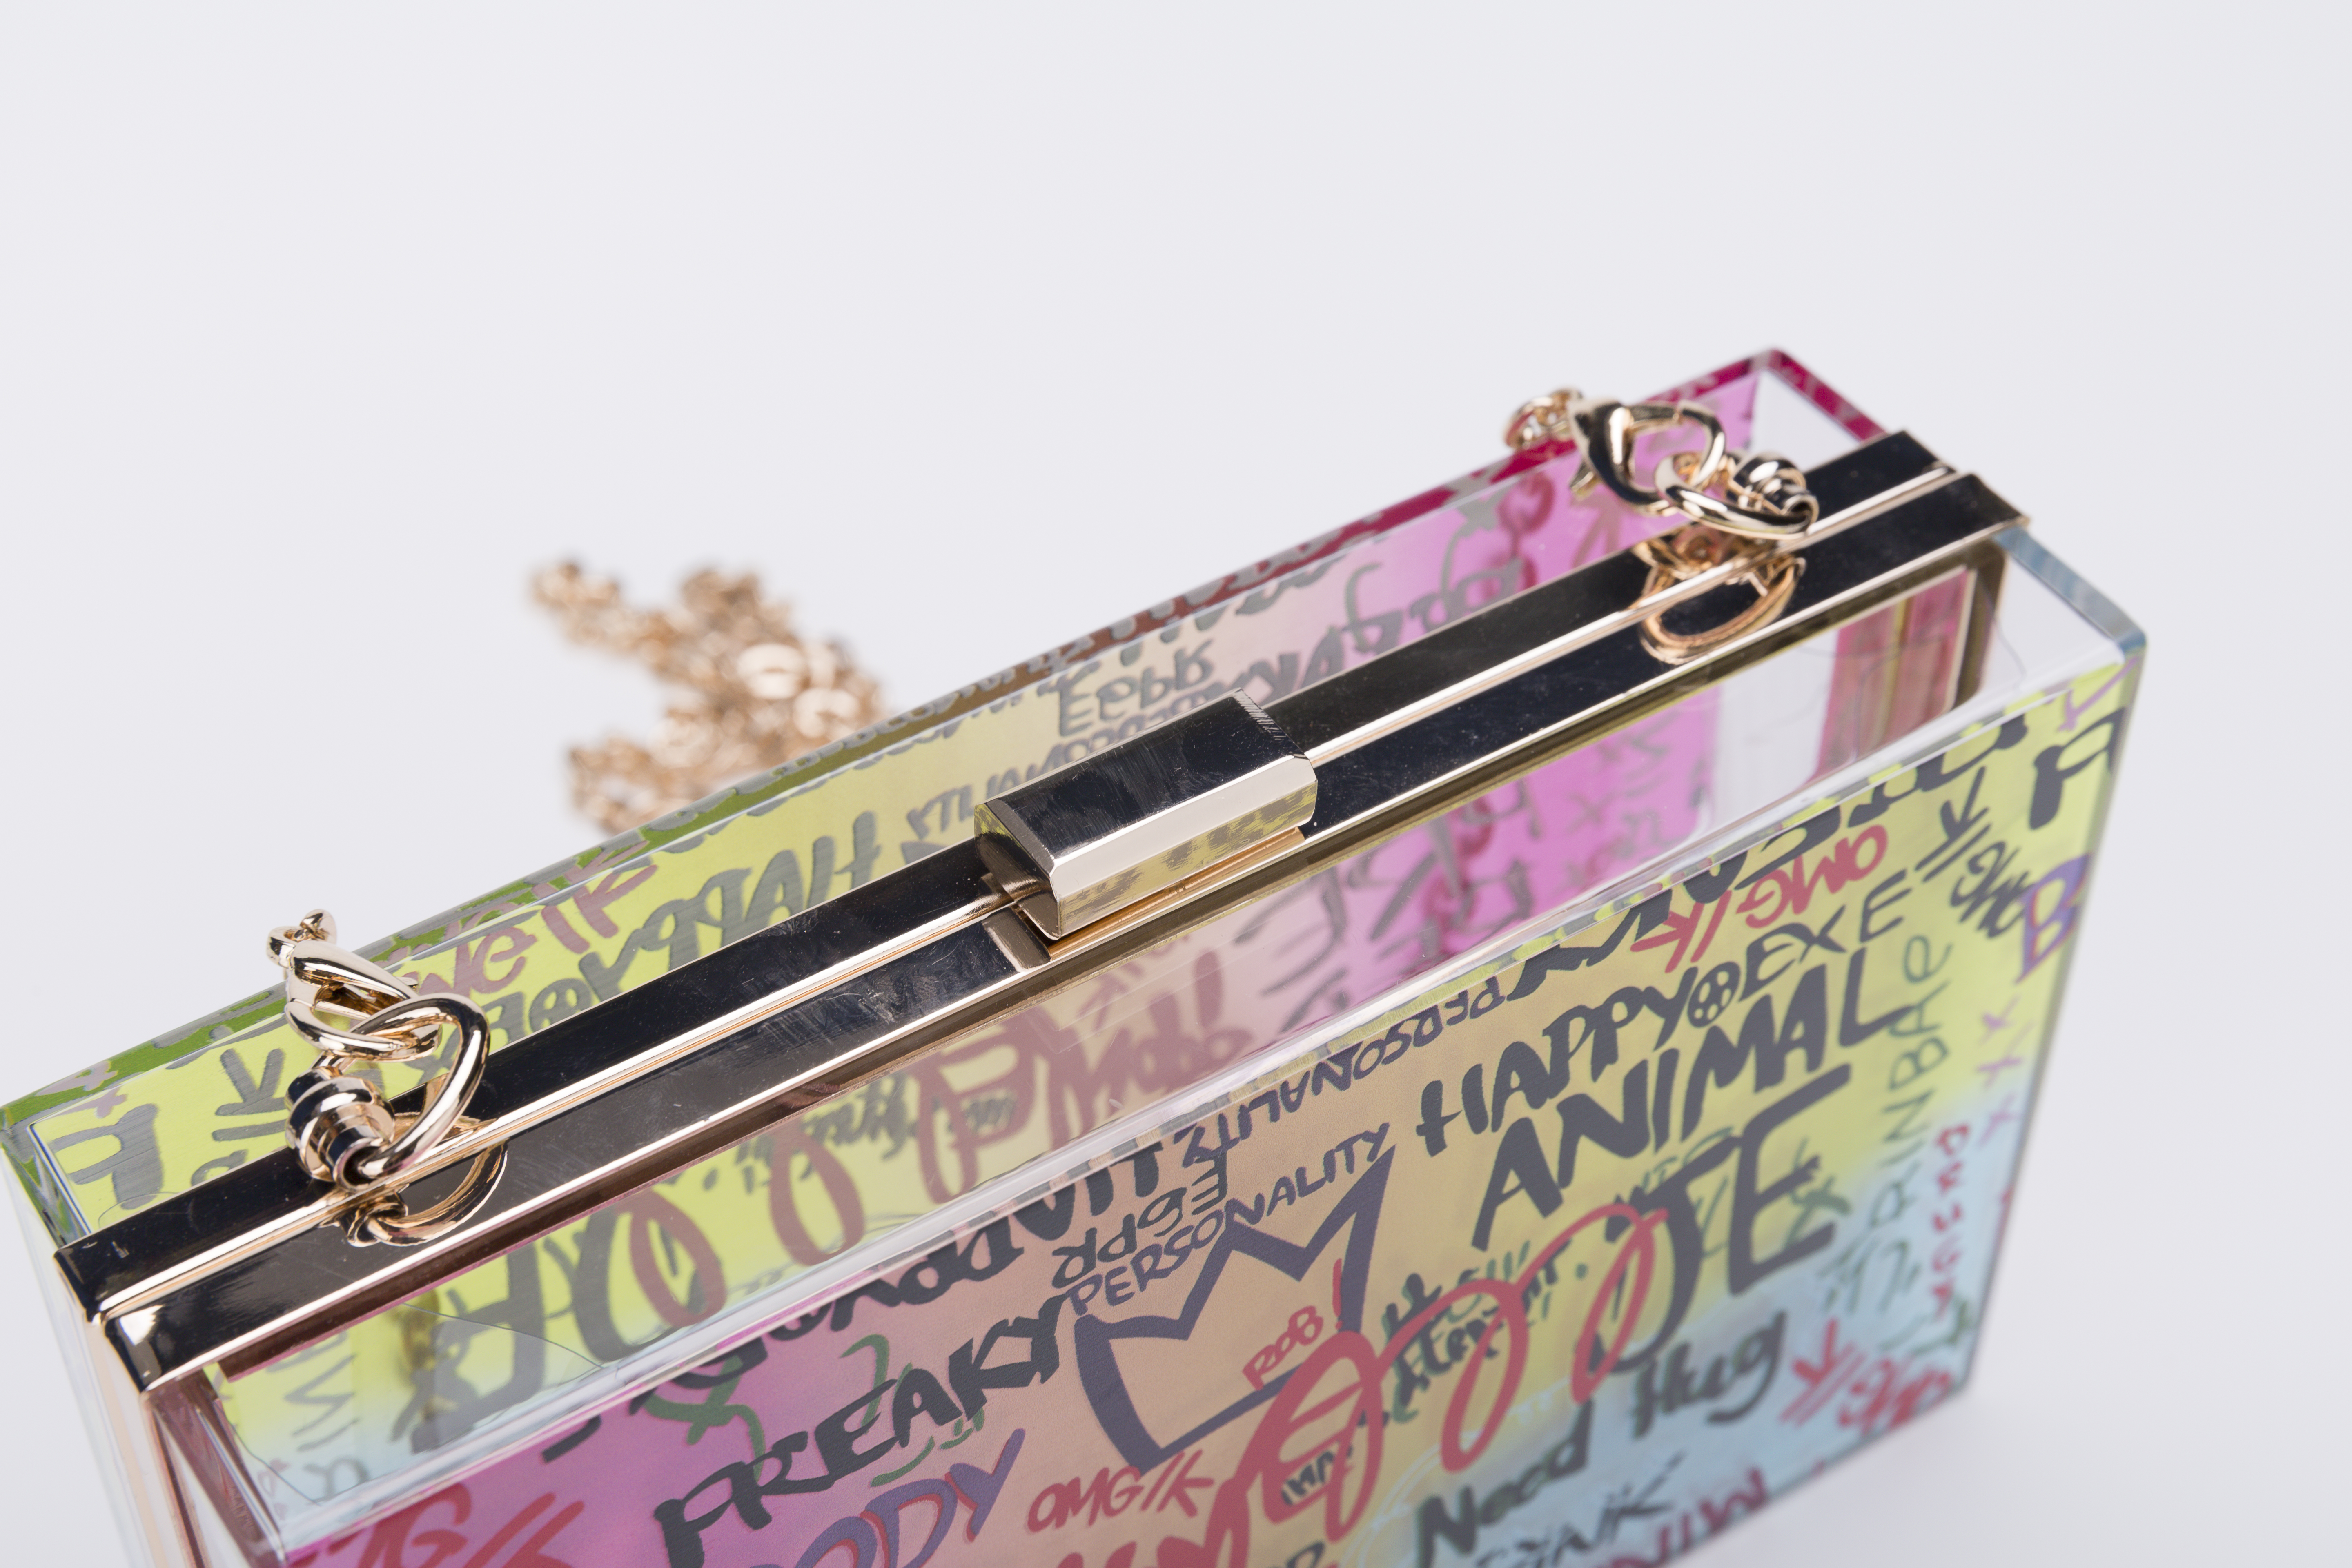 Colorful box graffiti handbag with metal chain straps